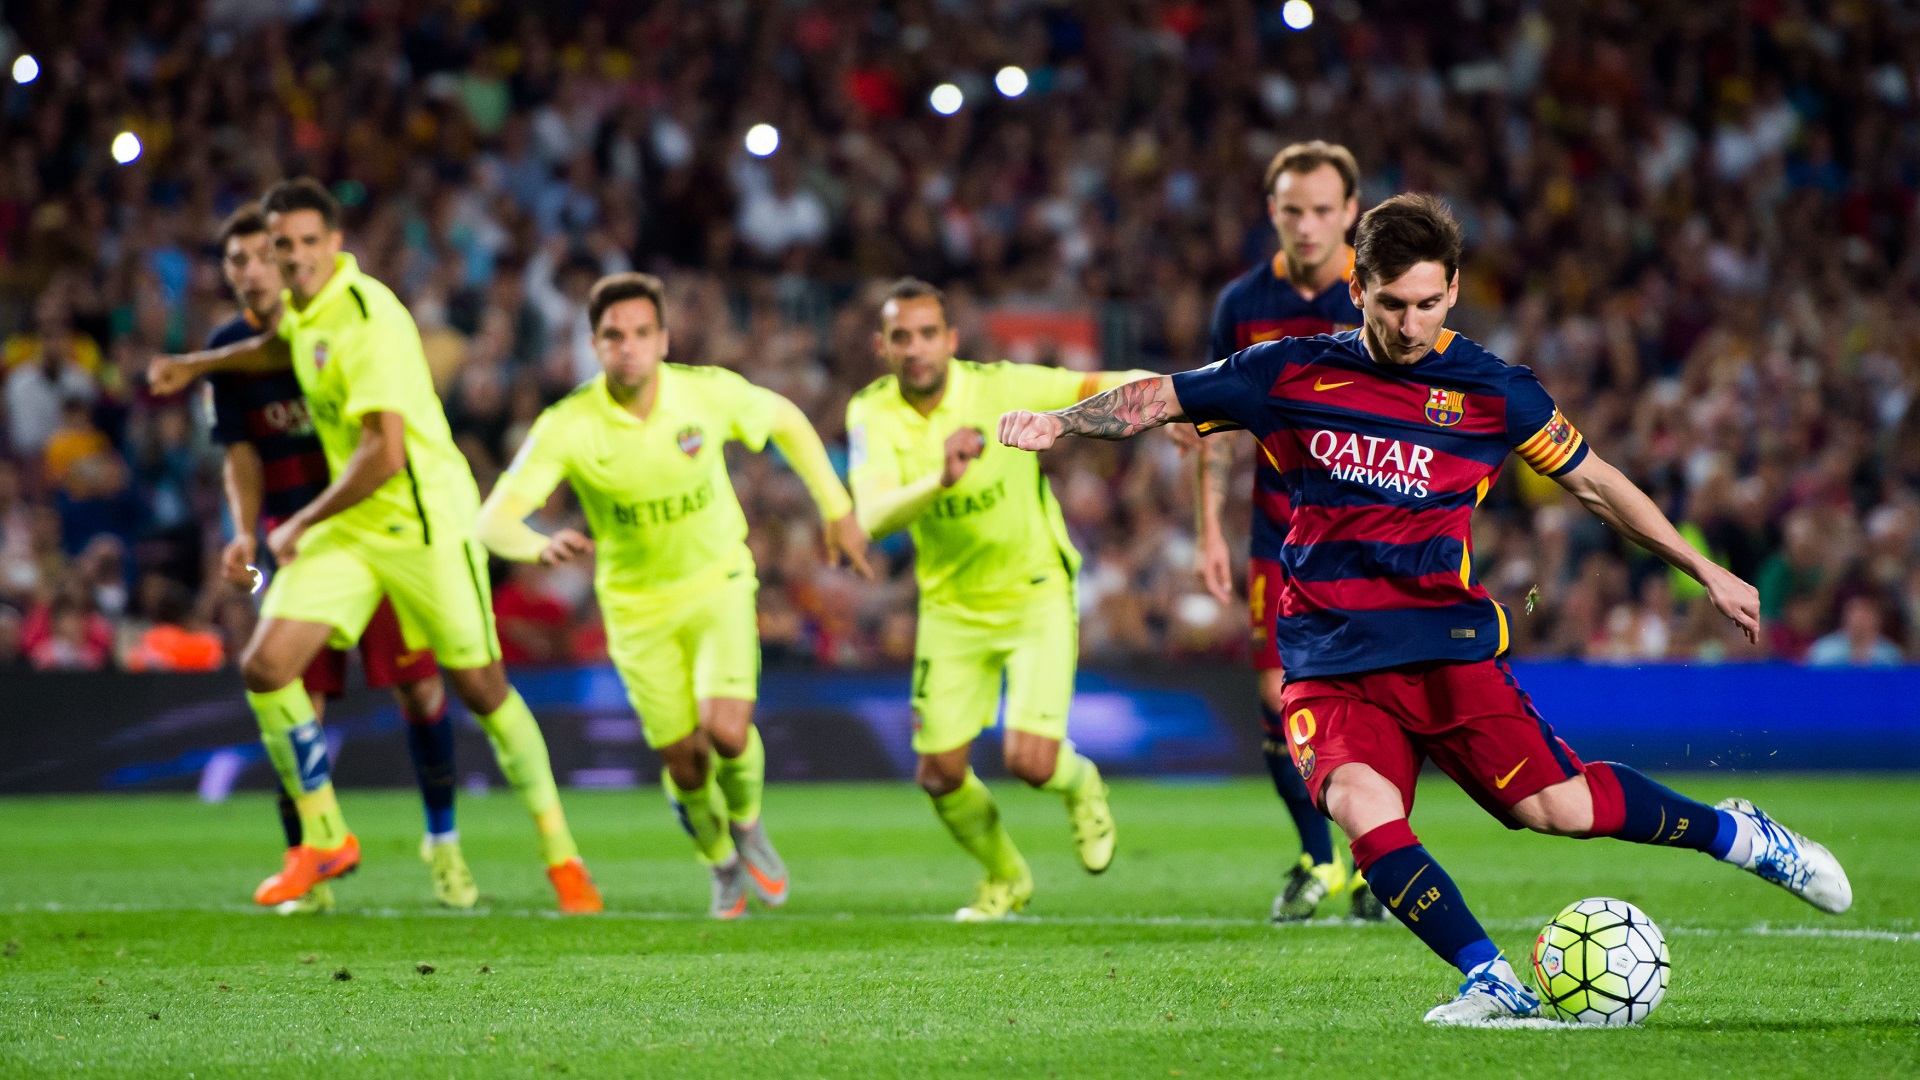 Barcelona Lionel Messi Kick Football Hd Free Football Background Mobile Desktop Download Wallpaper Images